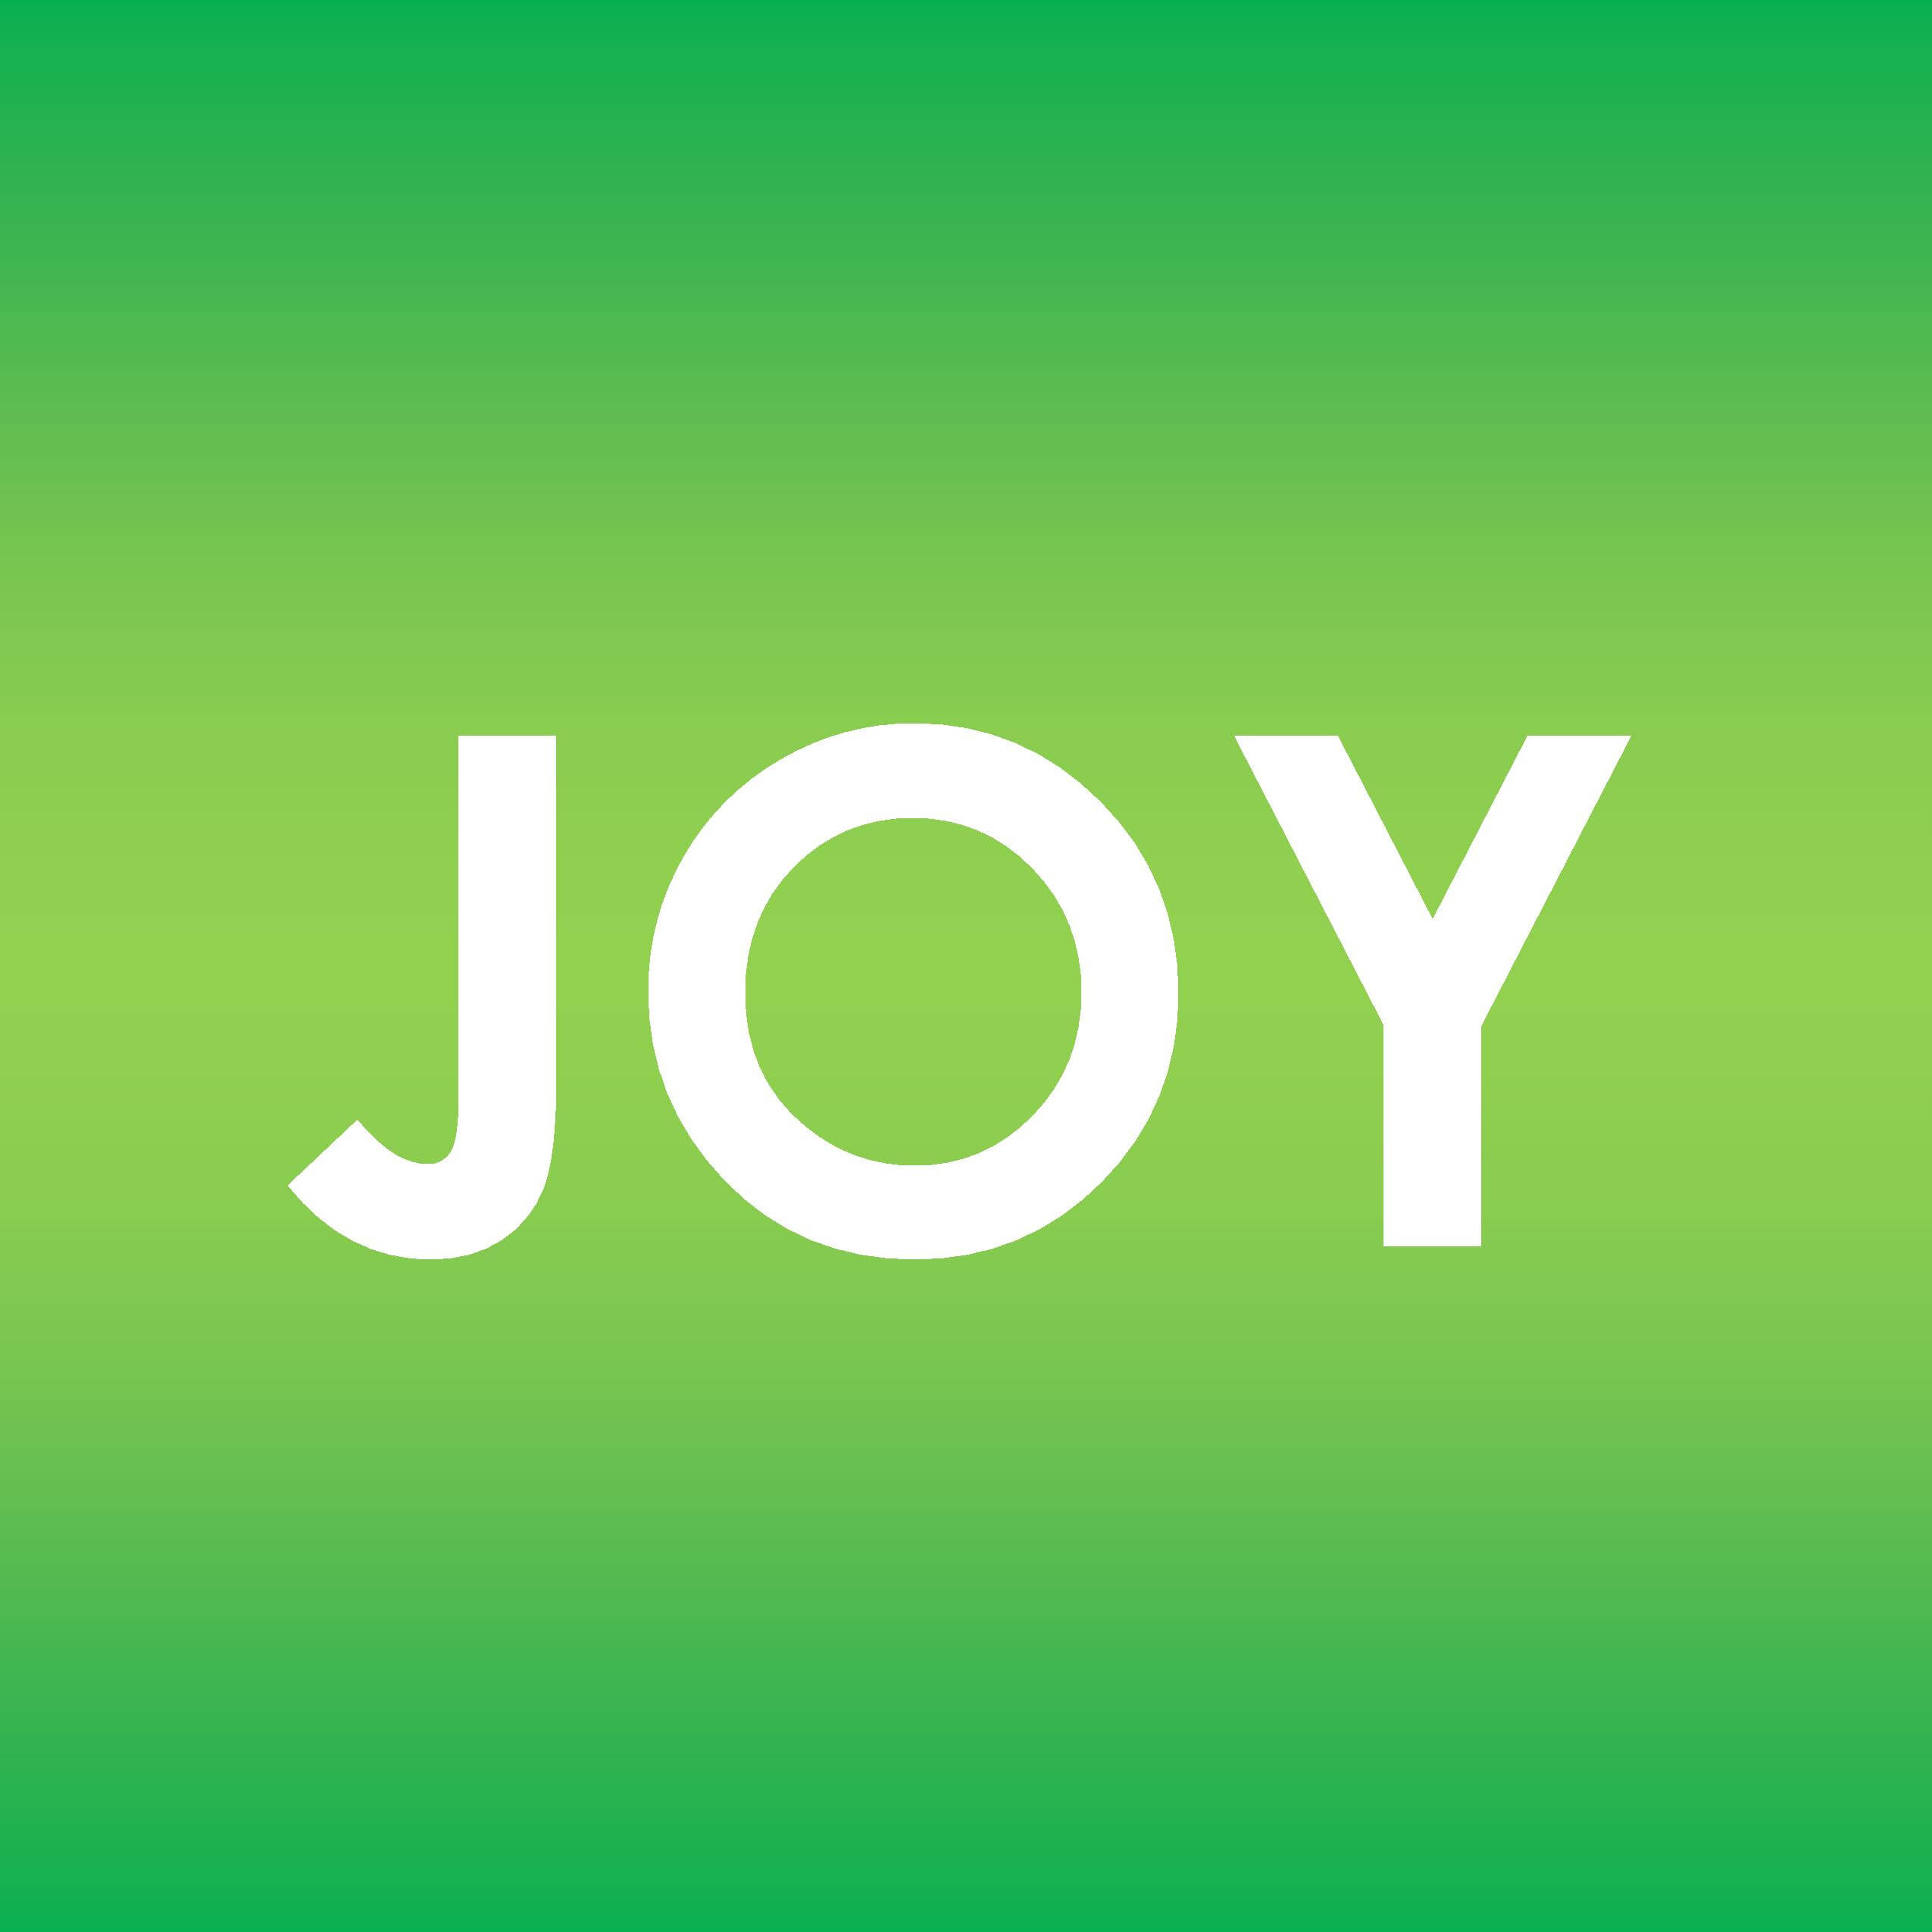 Ad Joy